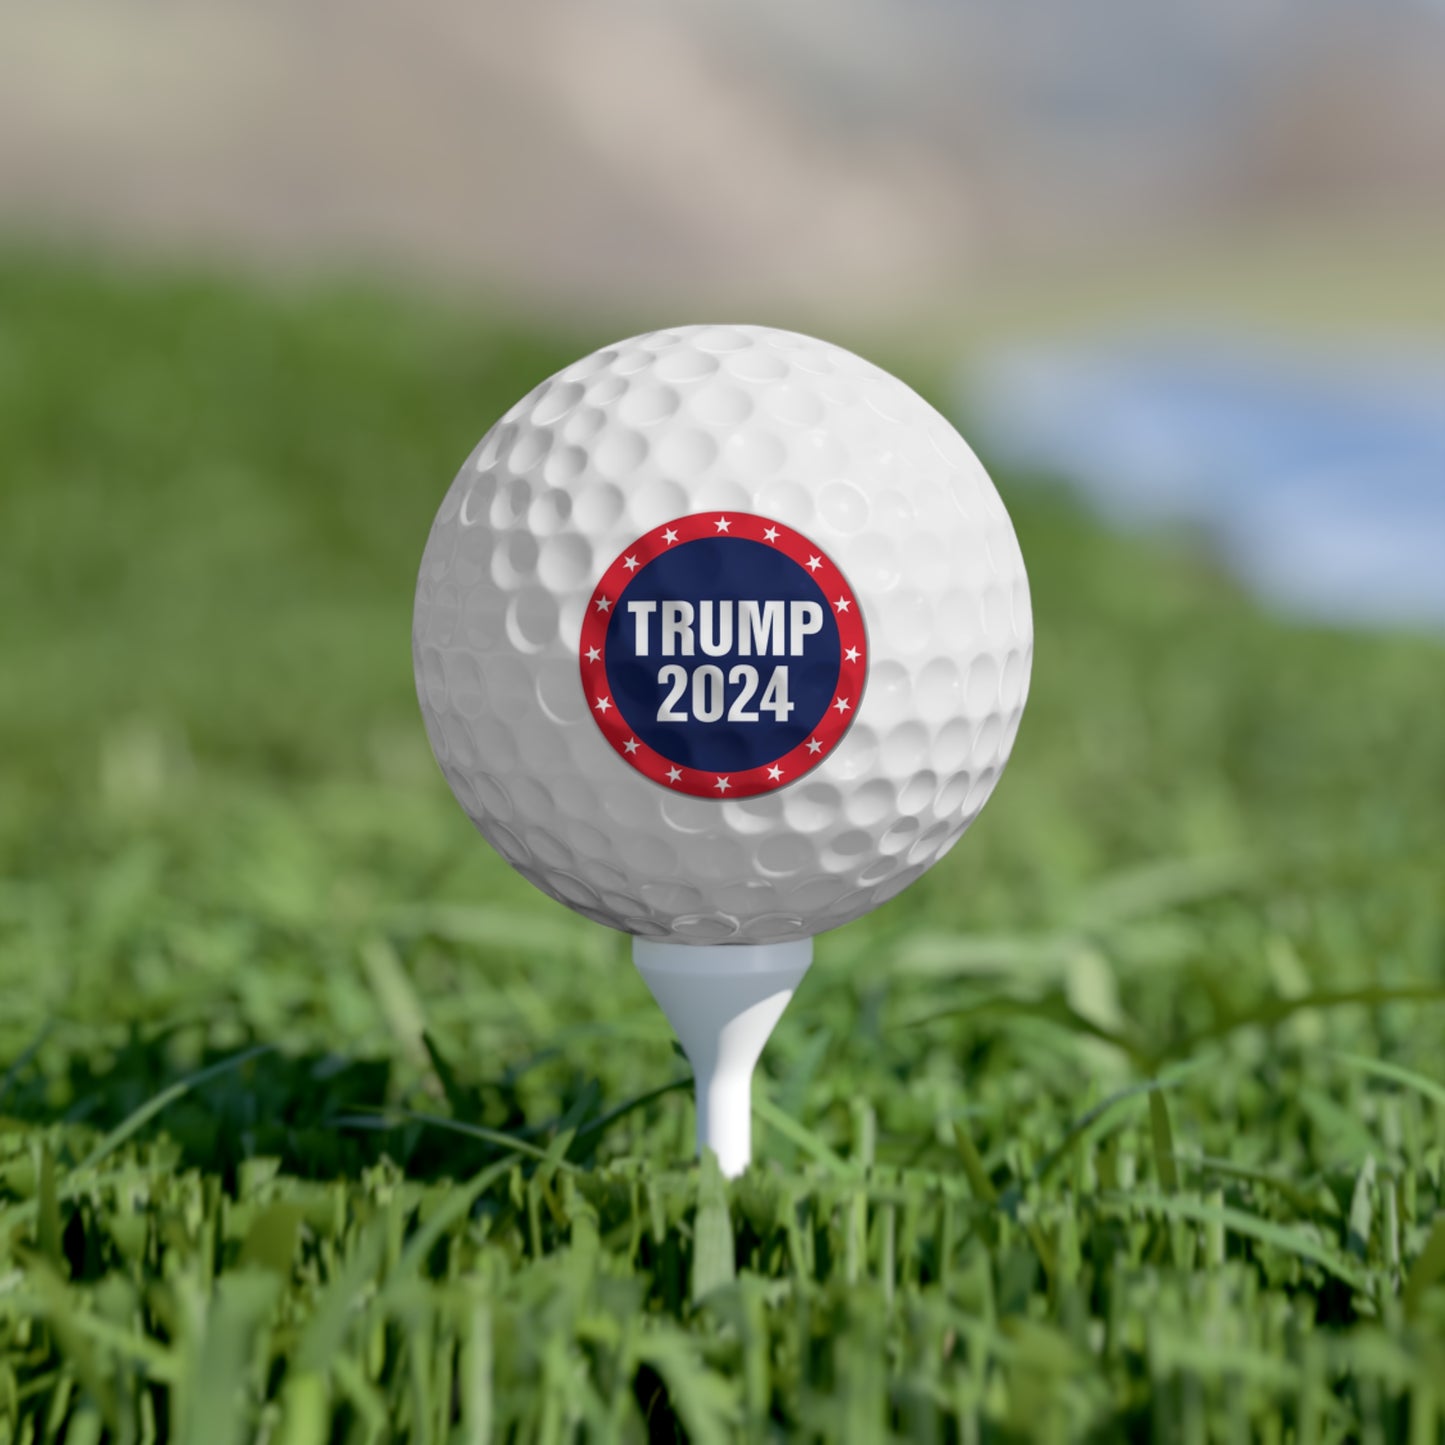 Trump 2024 Blue and Red MAGA High Quality Golf Balls, 6pcs